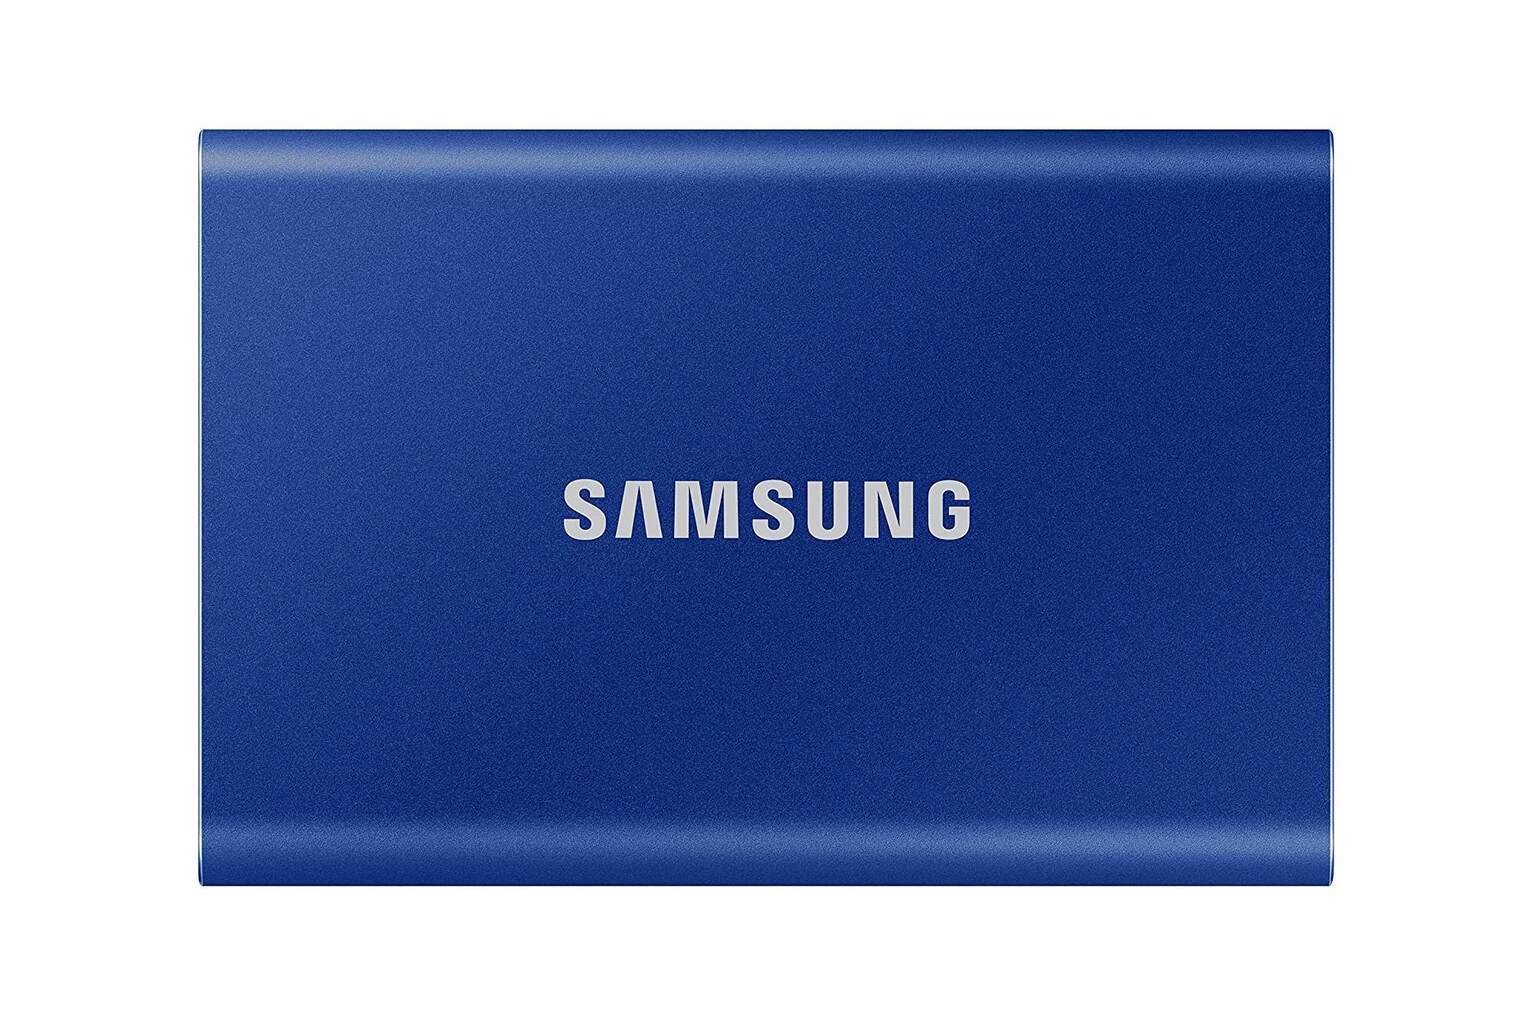 Samsung T7 USB 3.2 Gen 2 500GB Portable SSD Hard Drive Review